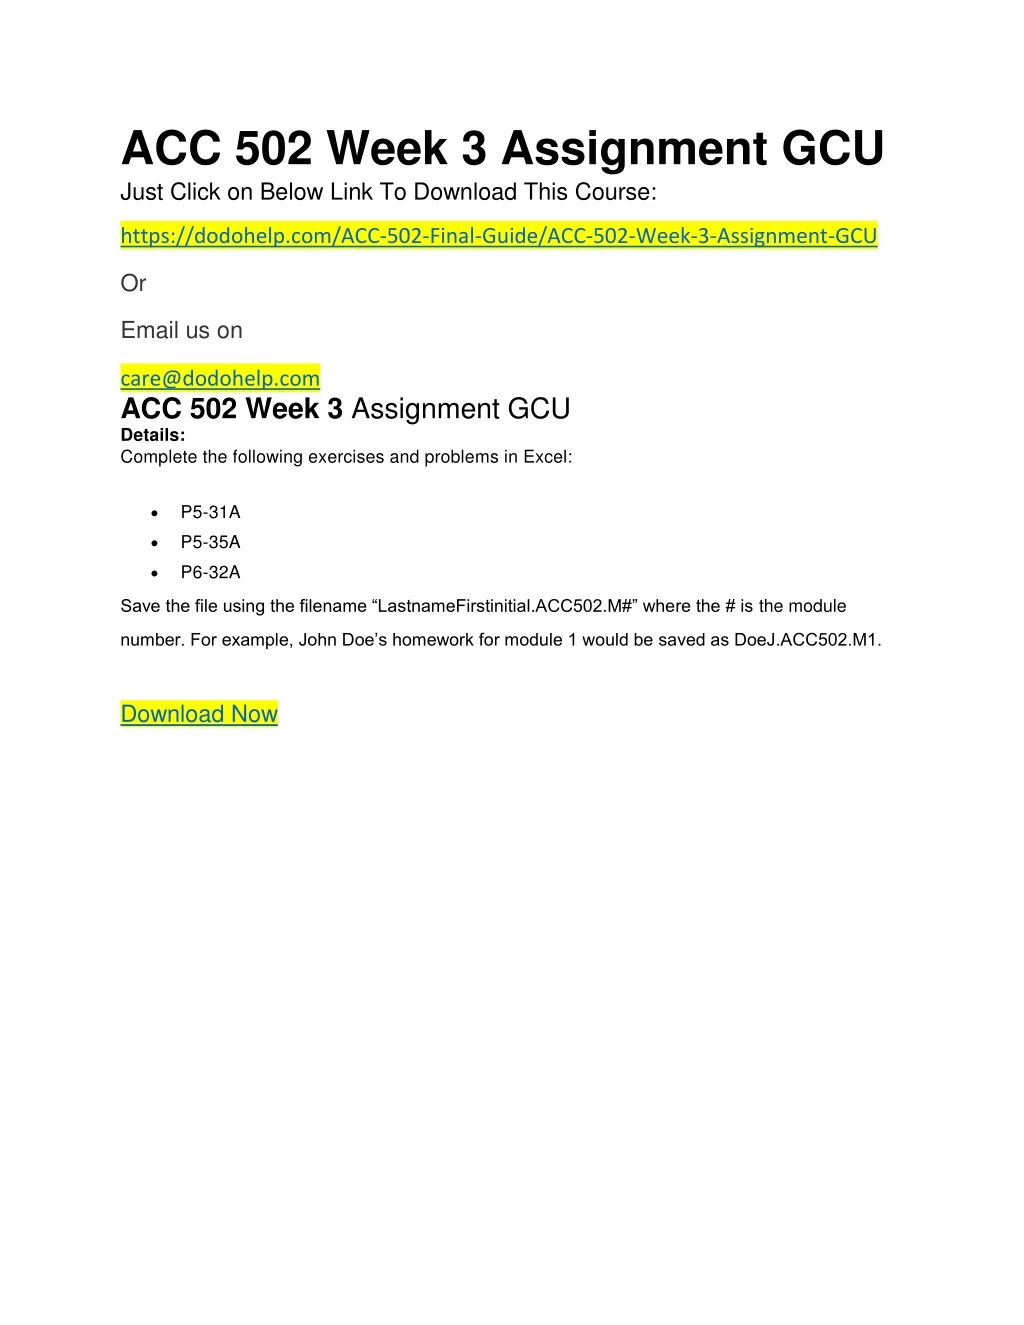 acc 502 week 3 assignment gcu just click on below